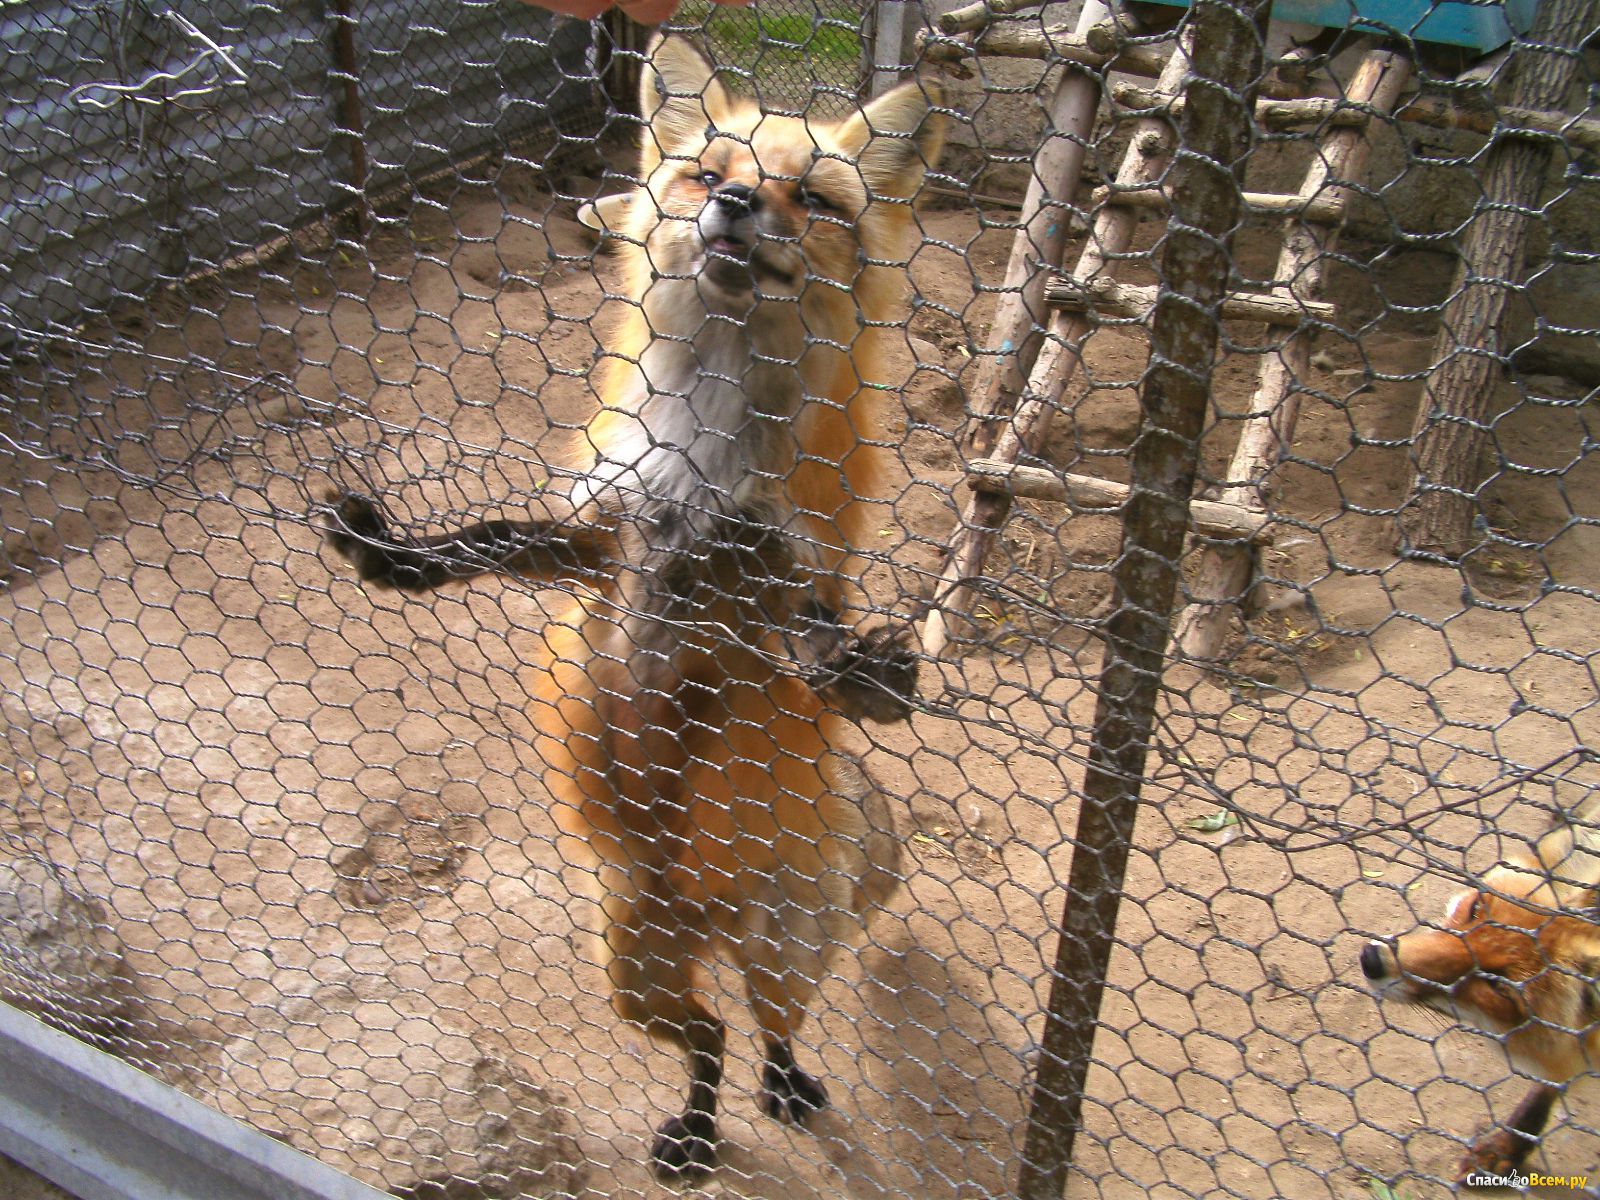 Зоопарк в омске